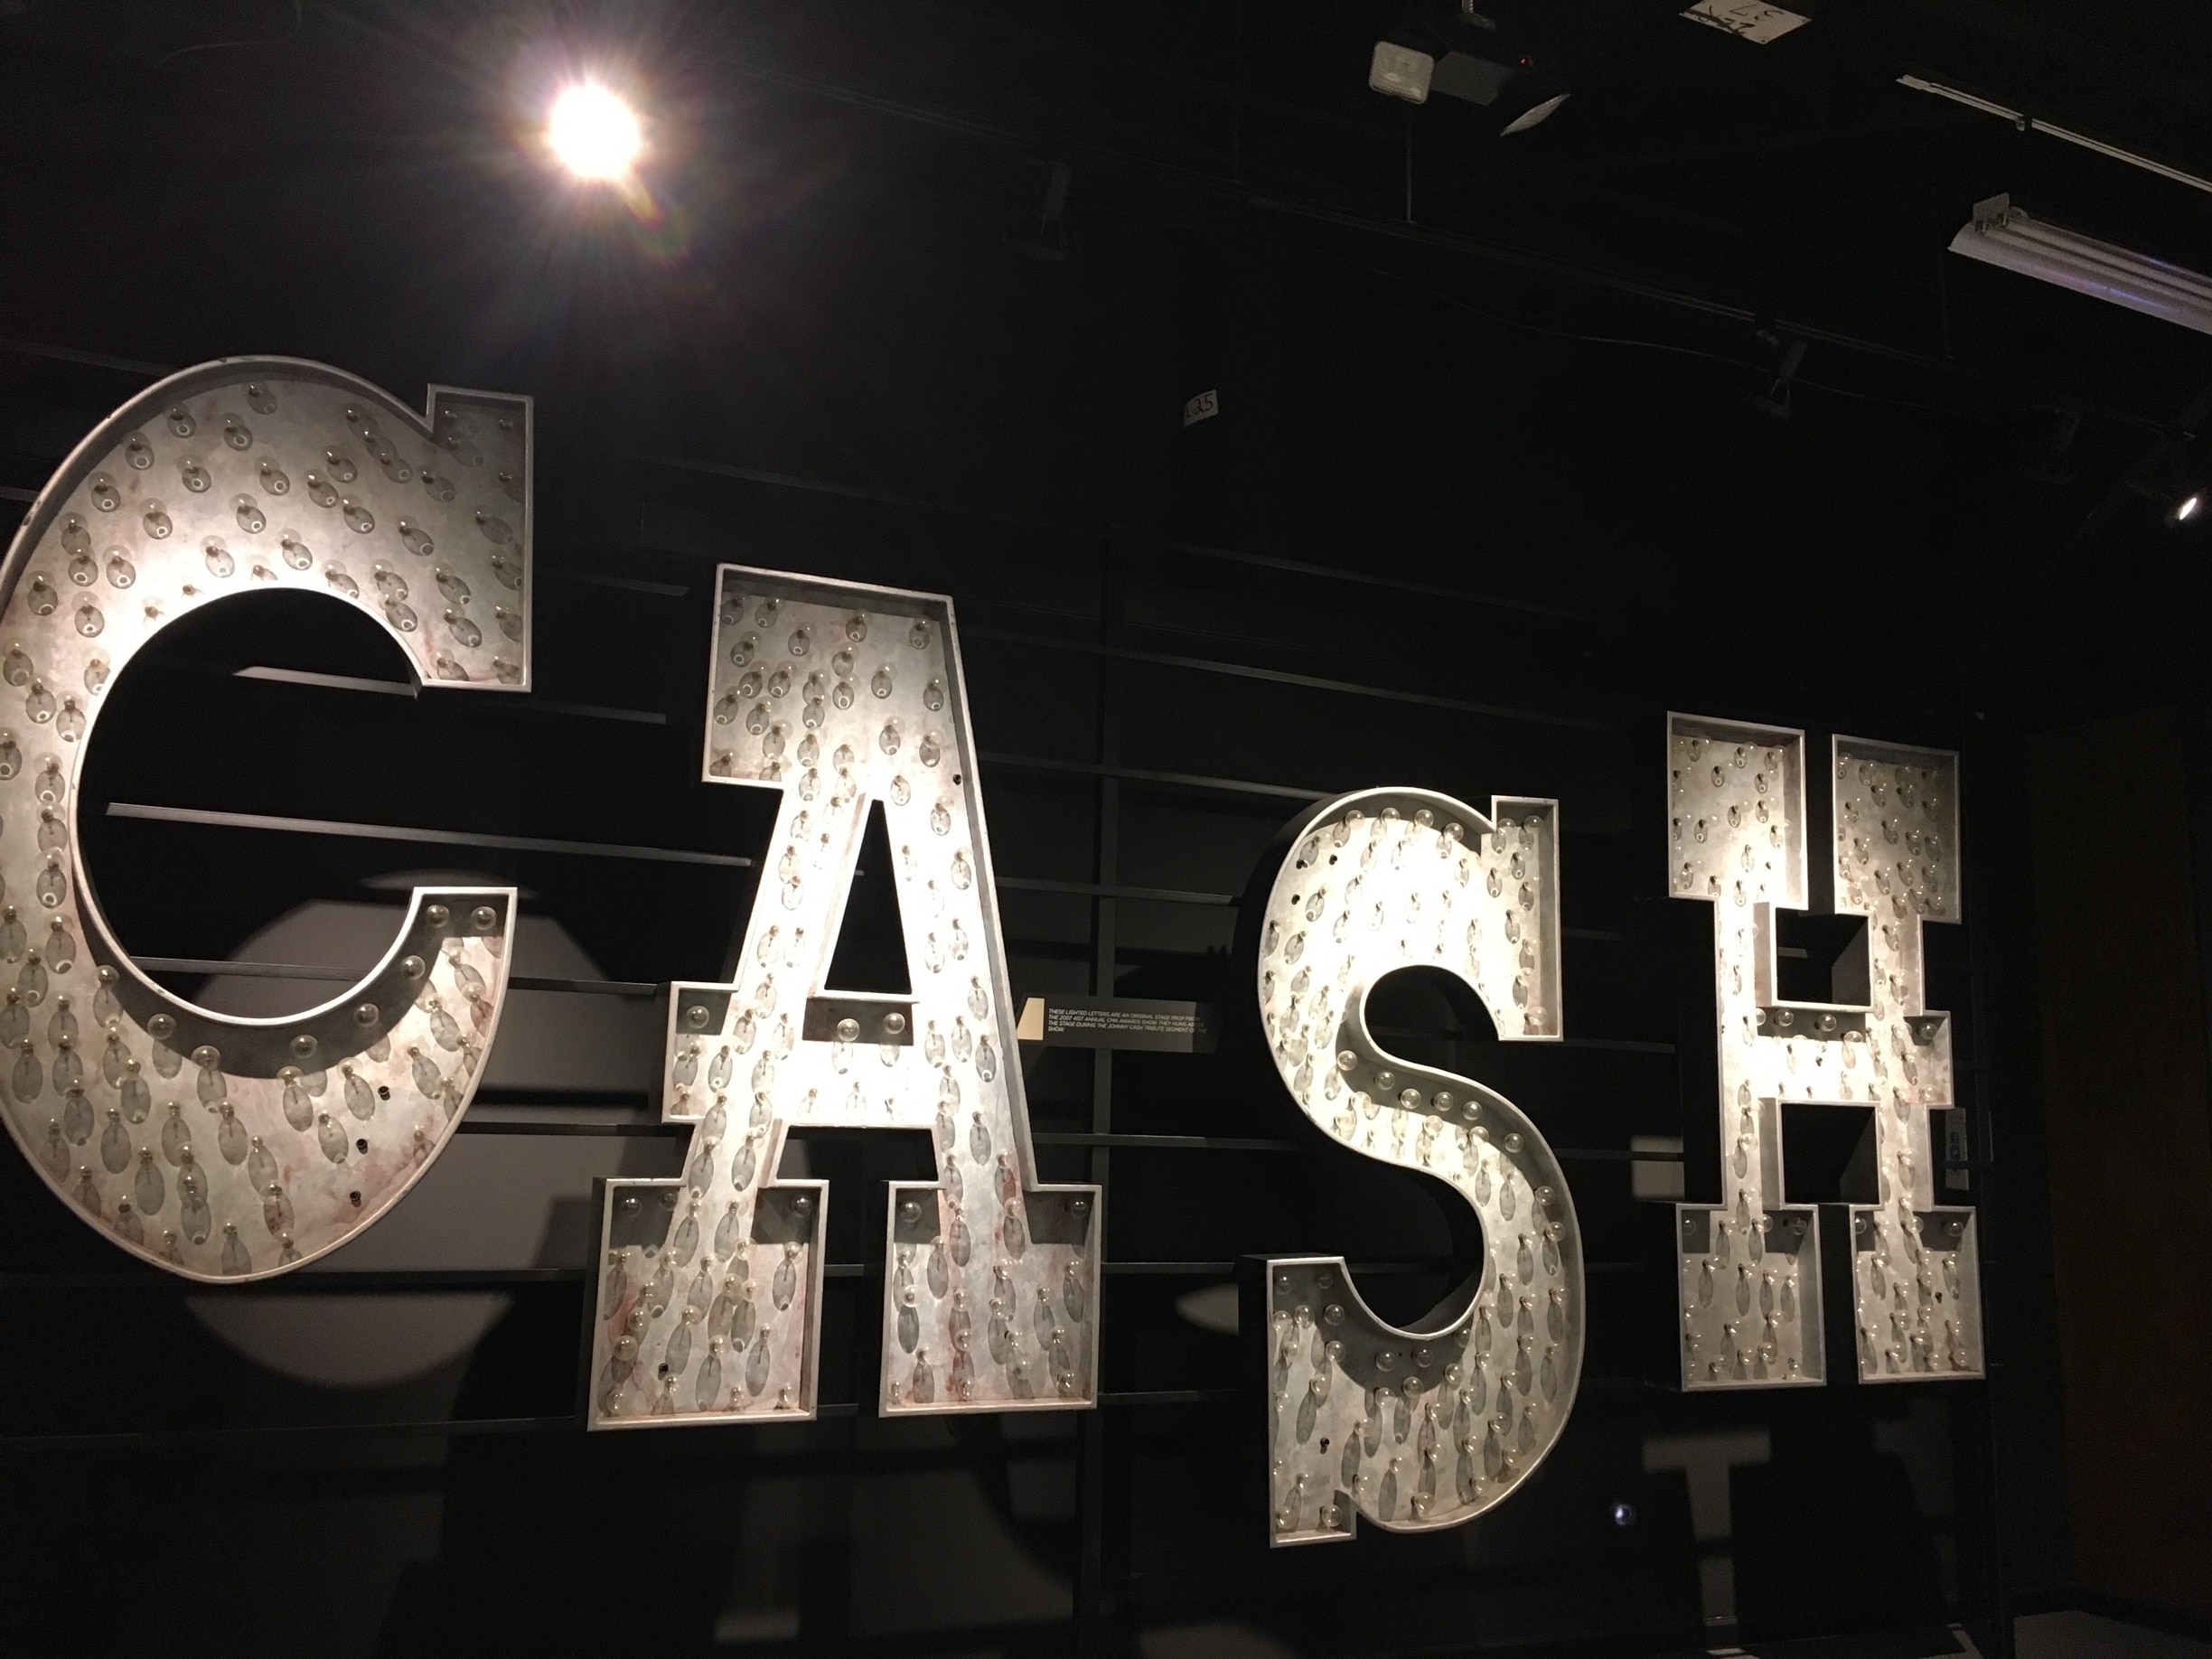 Pretty cool. Johnny Cash -
#johnnycash
#museum
#musichalloffame
#Nashville
#Tennessee 
#cash
#exploringtheUSA